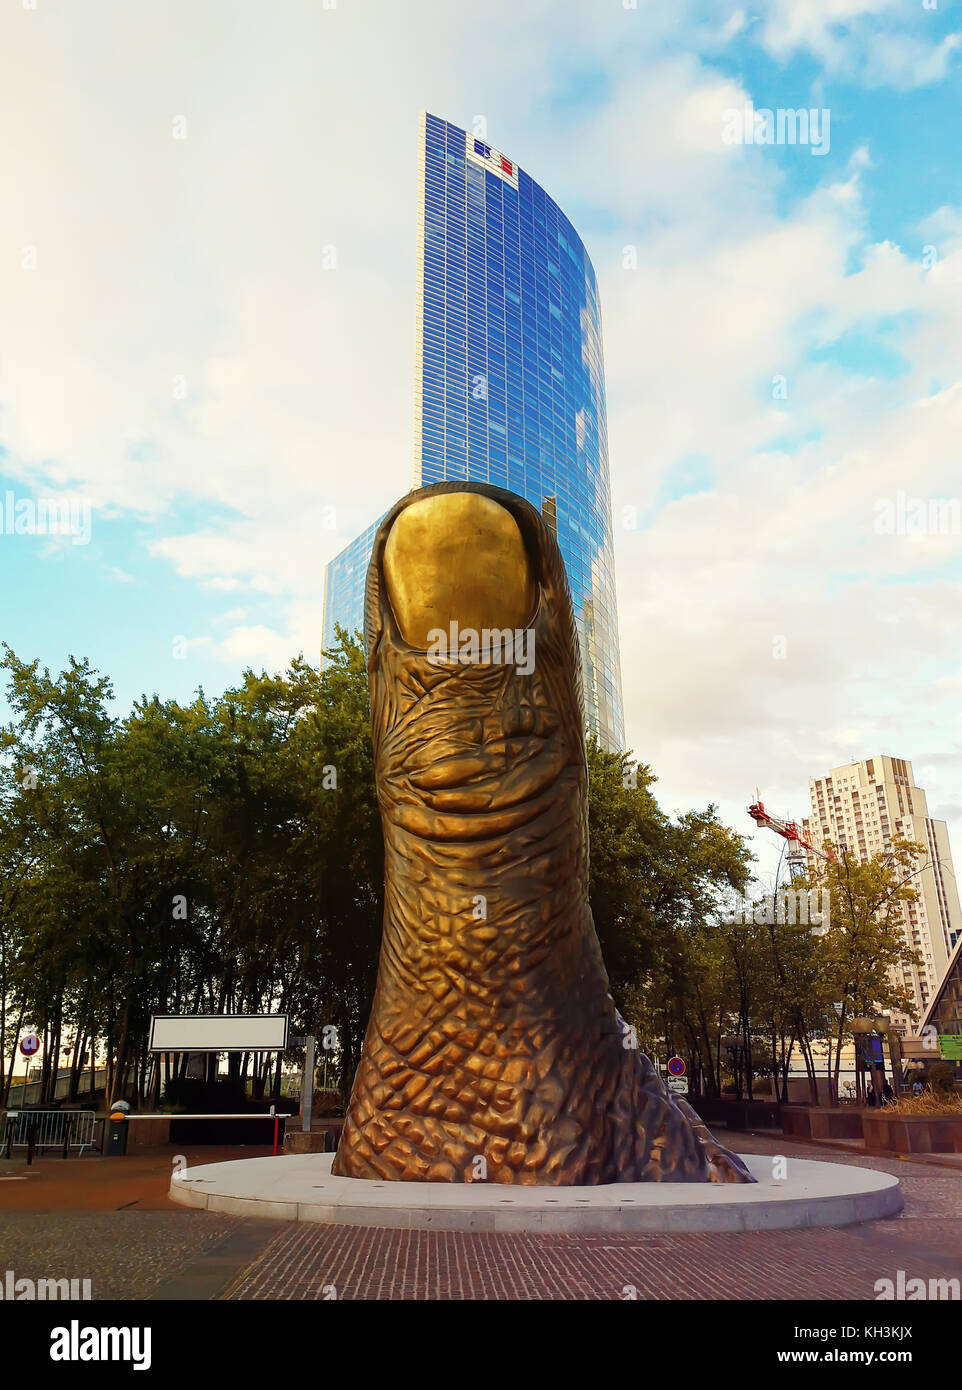 Giant thumb monument to the finger near the shopping center La Defense,  Paris, France Stock Photo - Alamy